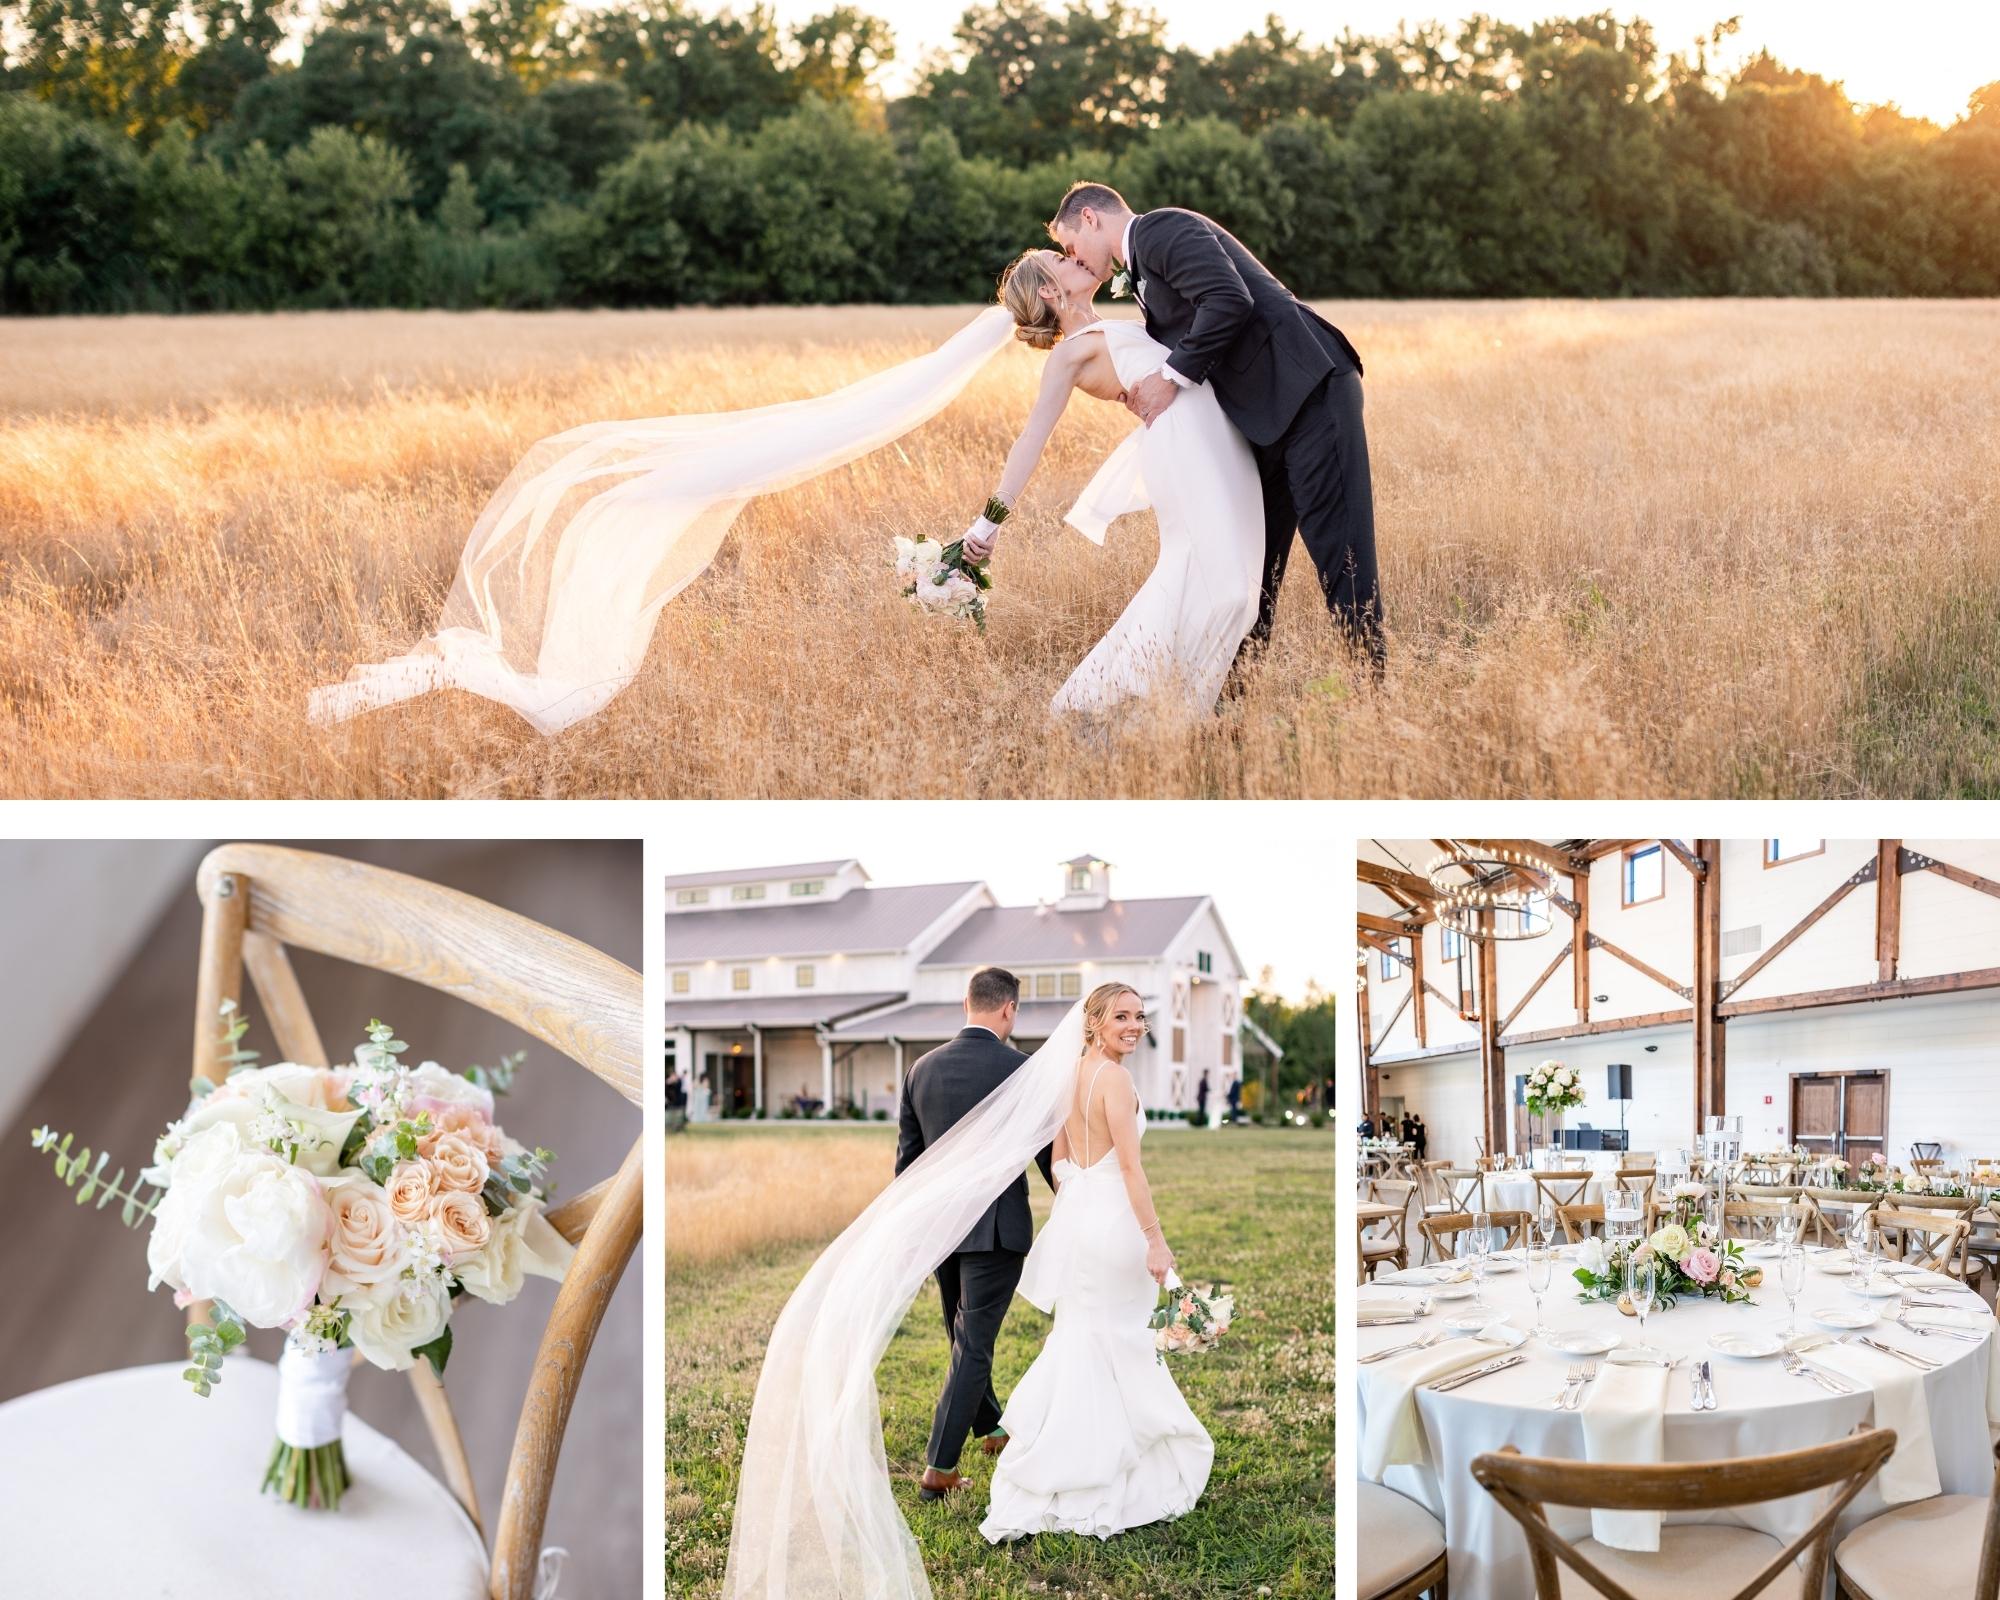 Collection of luxury wedding photographs from Kent Island Resort wedding in June - DMV Wedding Photographer, Luxury Wedding Photographer